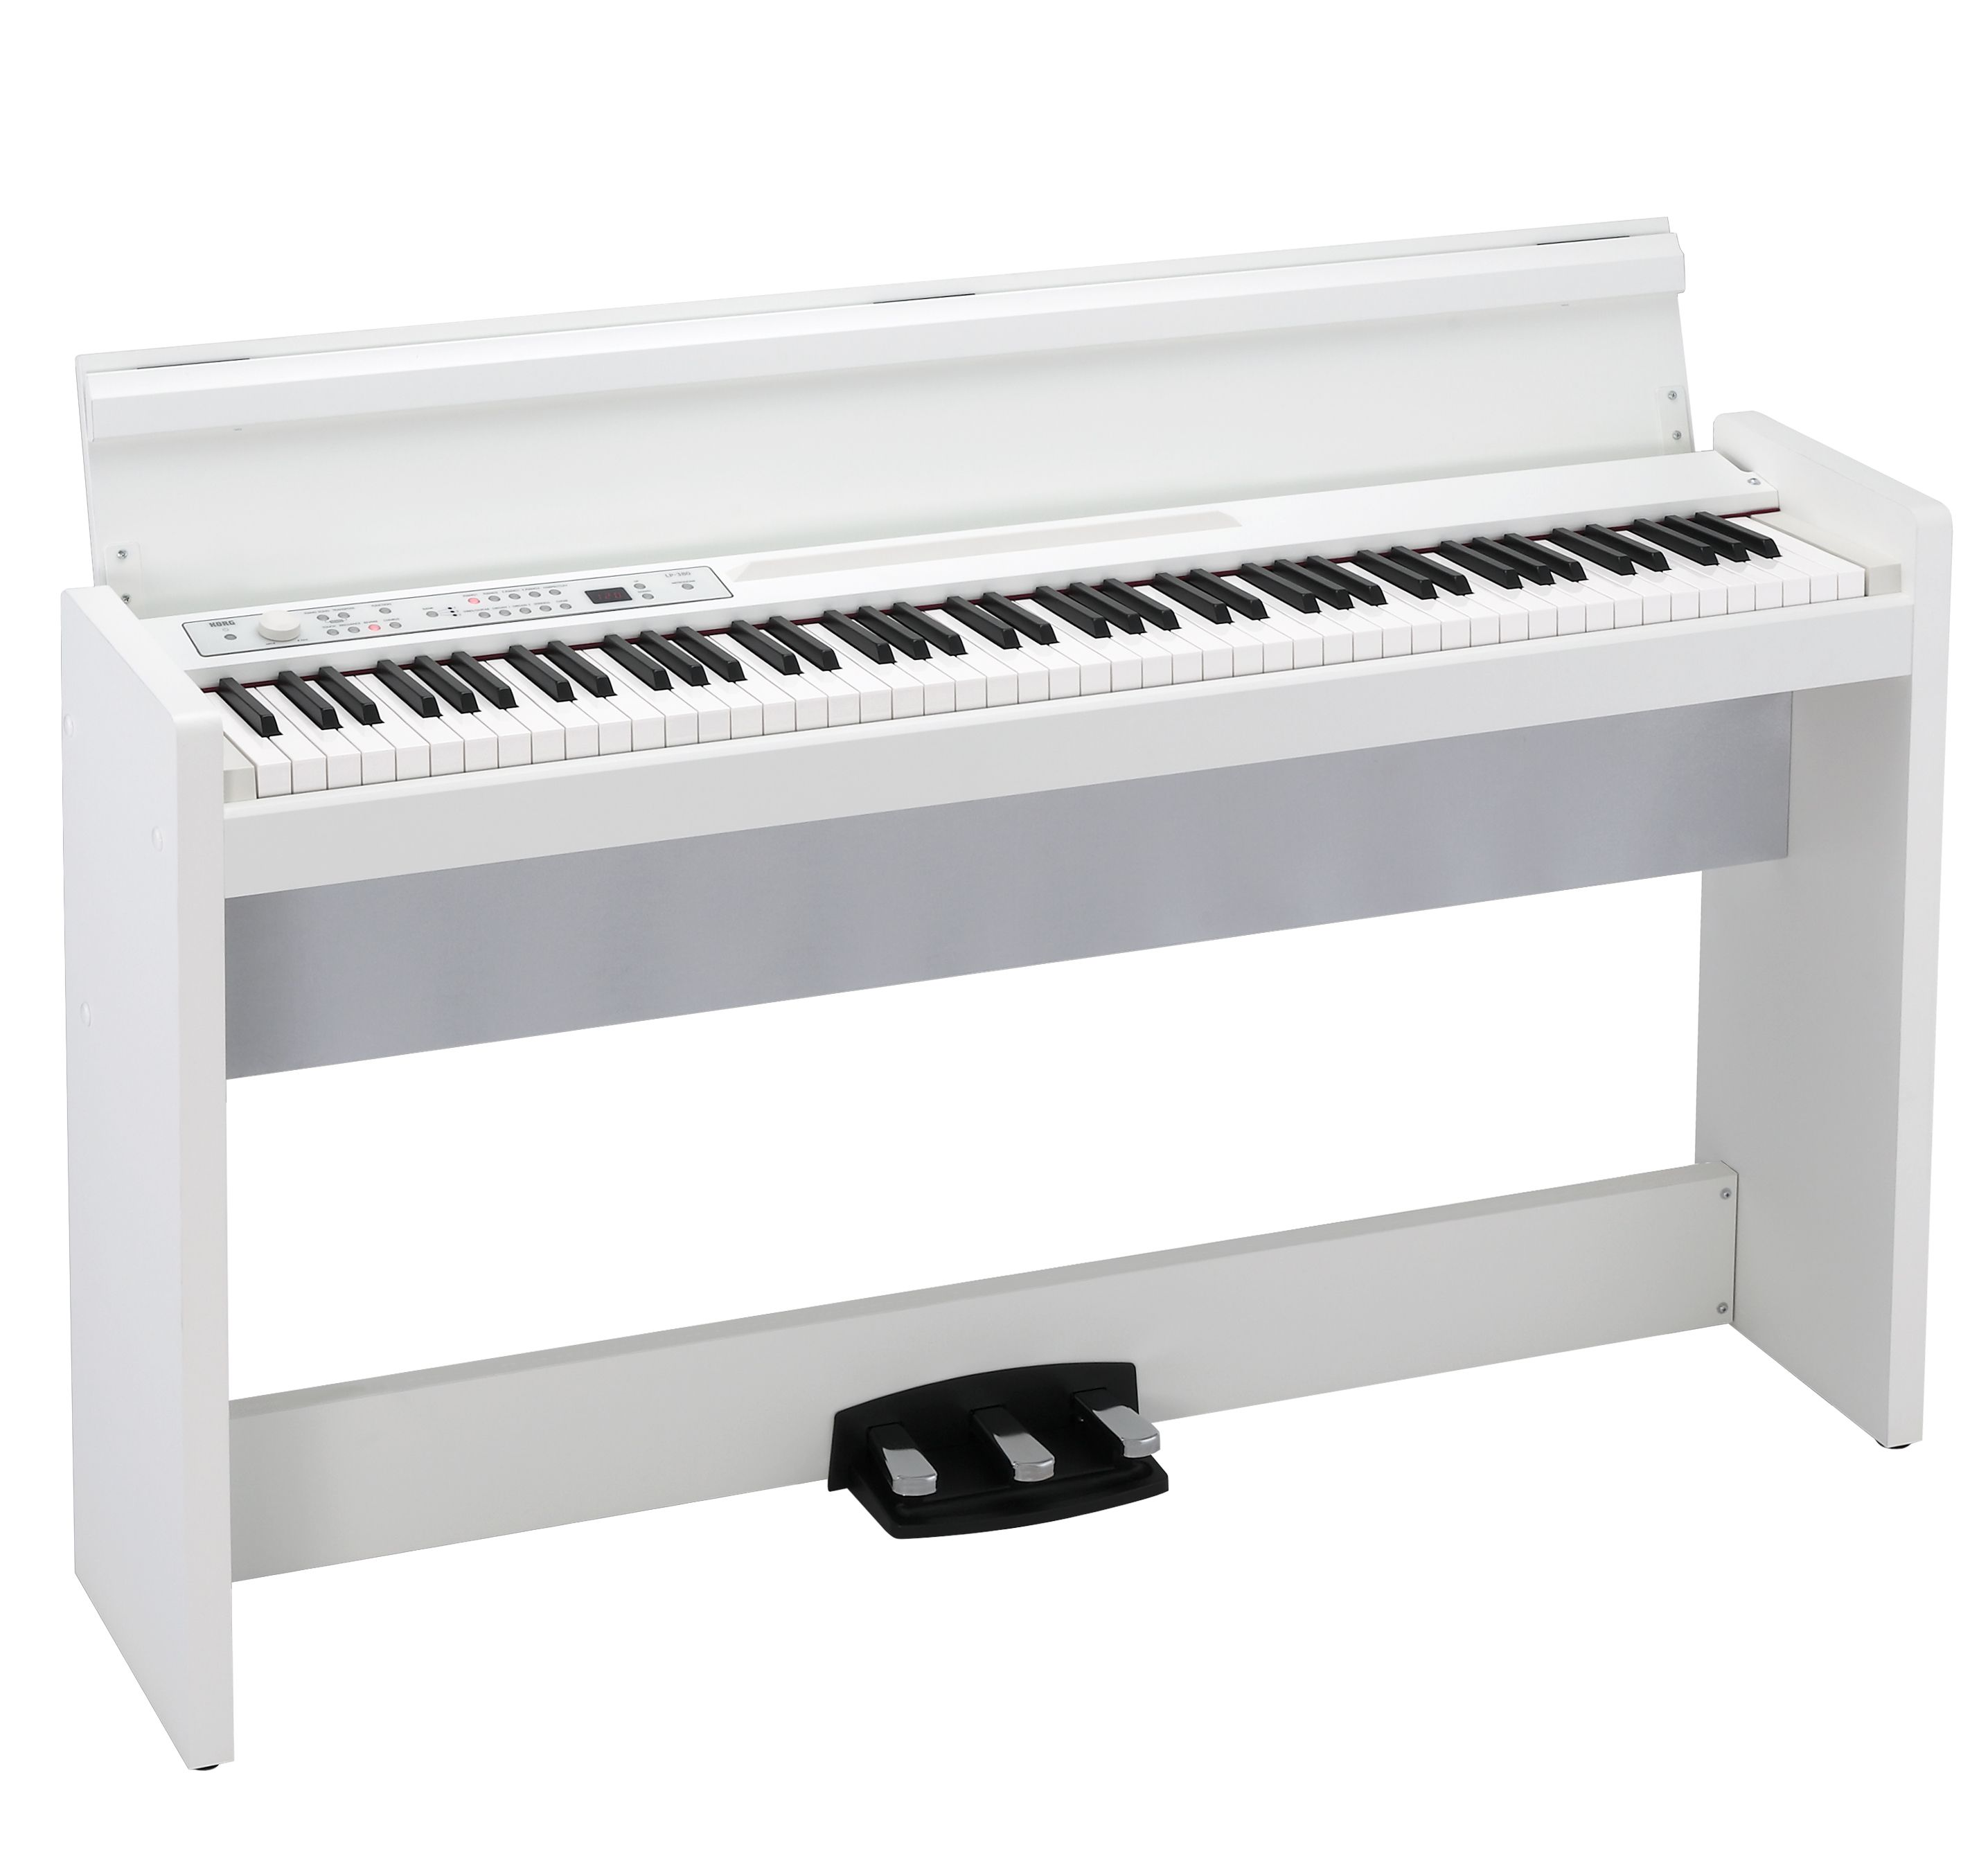 KORG LP-380 WH цифровое пианино, цвет белый. 88 клавиш